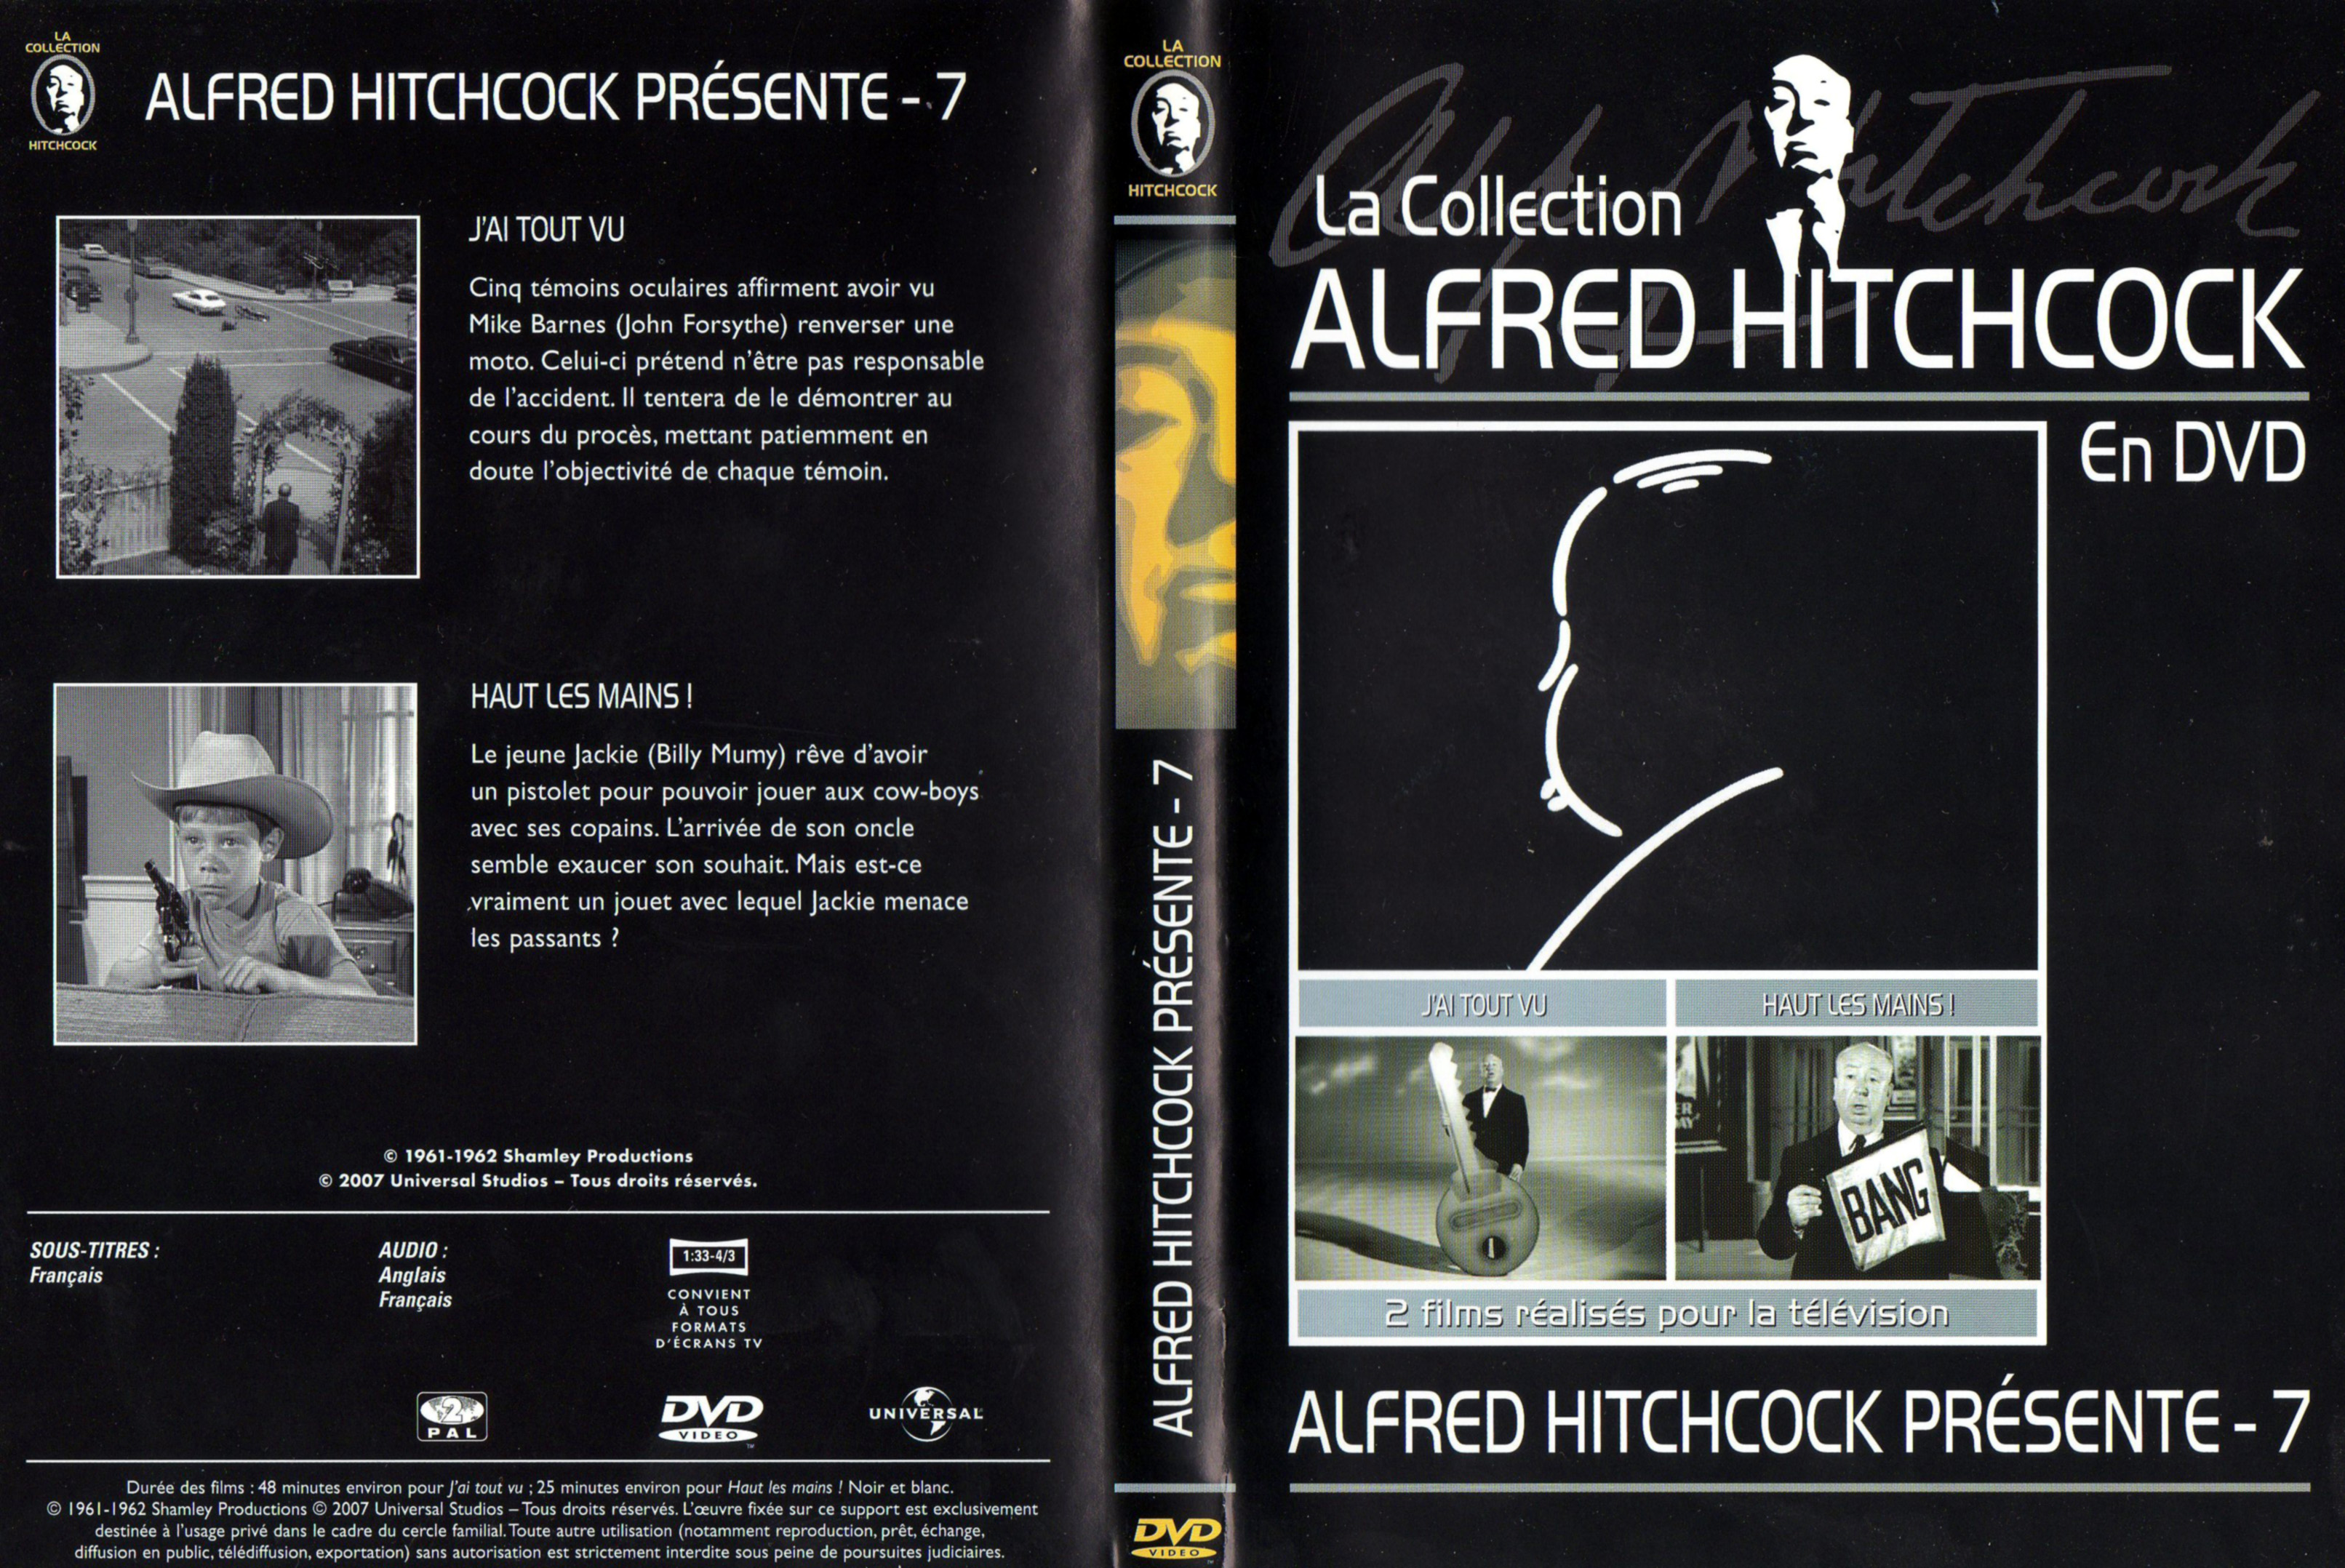 Jaquette DVD Alfred Hitchcock prsente DVD 7